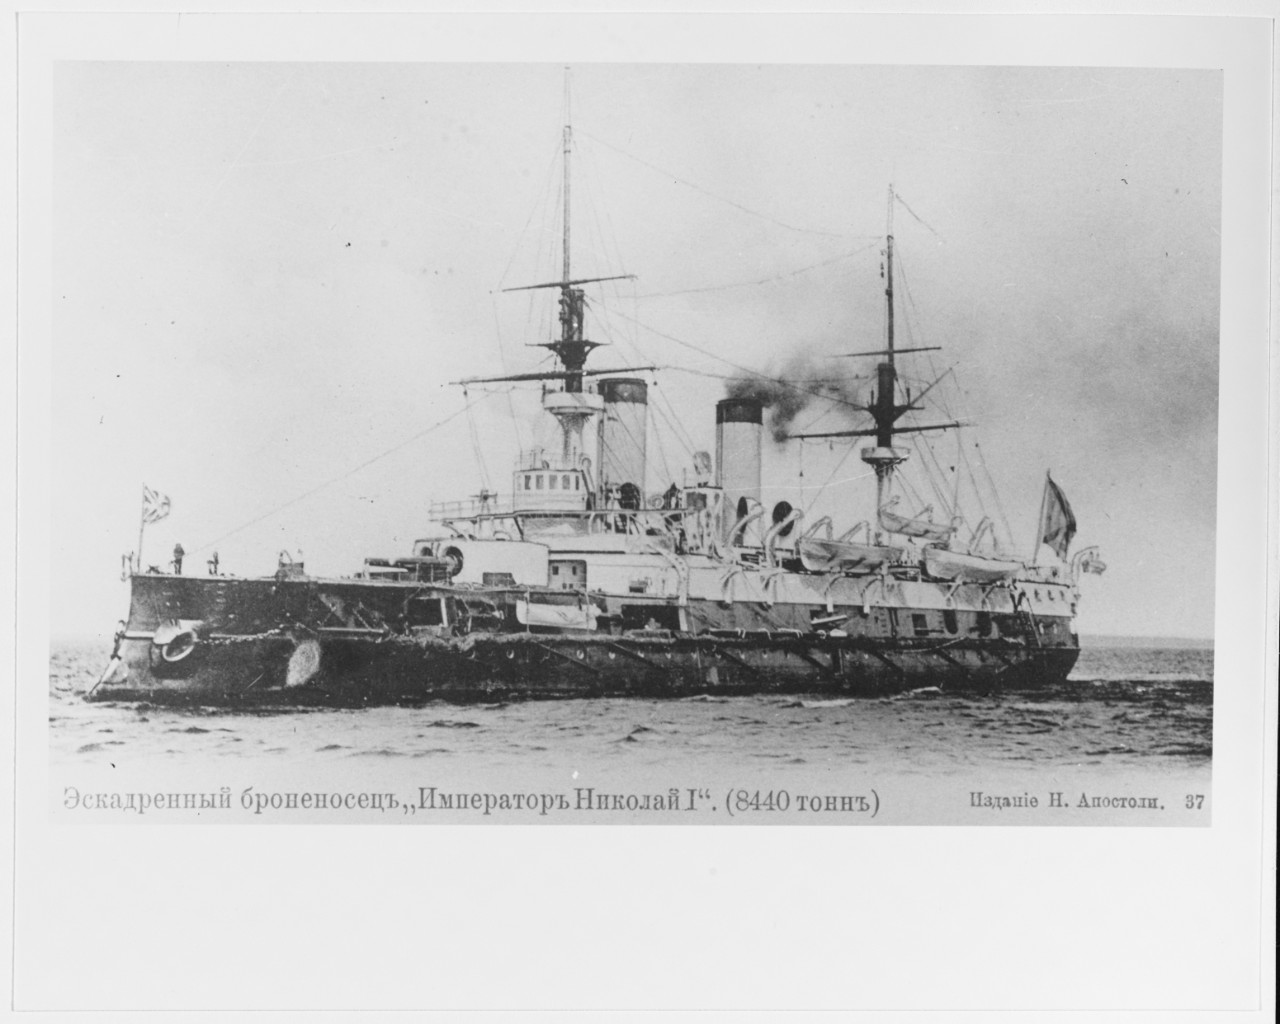 IMPERATOR NIKOLAI I (Russian battleship, 1889-1915)